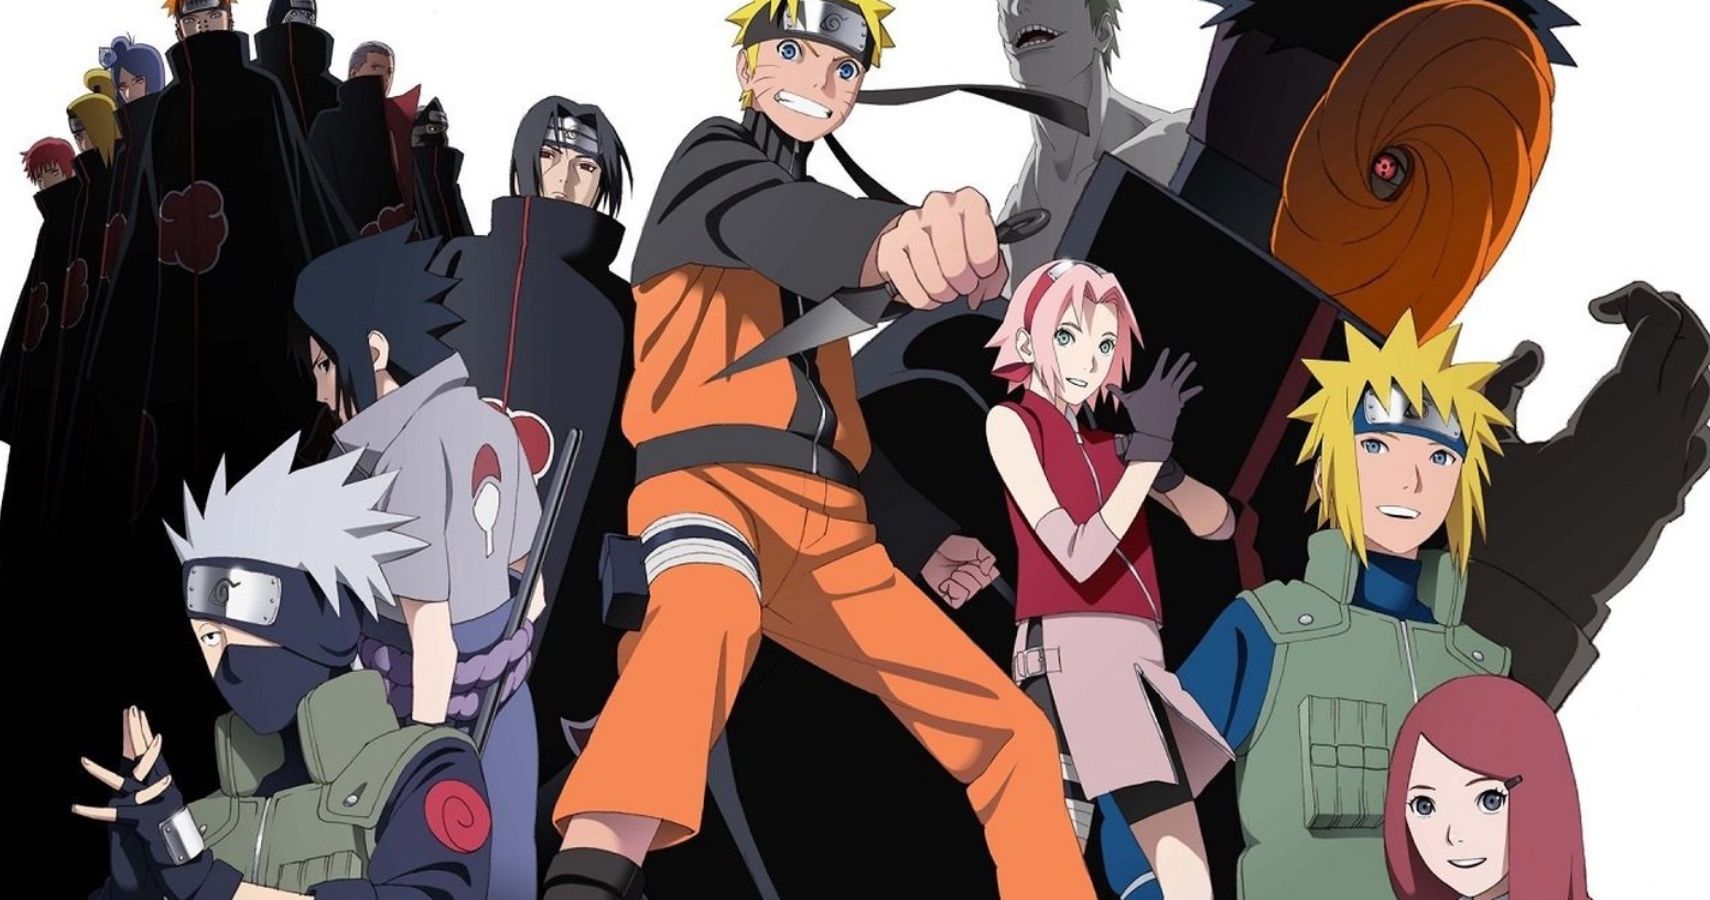 Worst Episodes Of Naruto: Shippuden According To IMDb